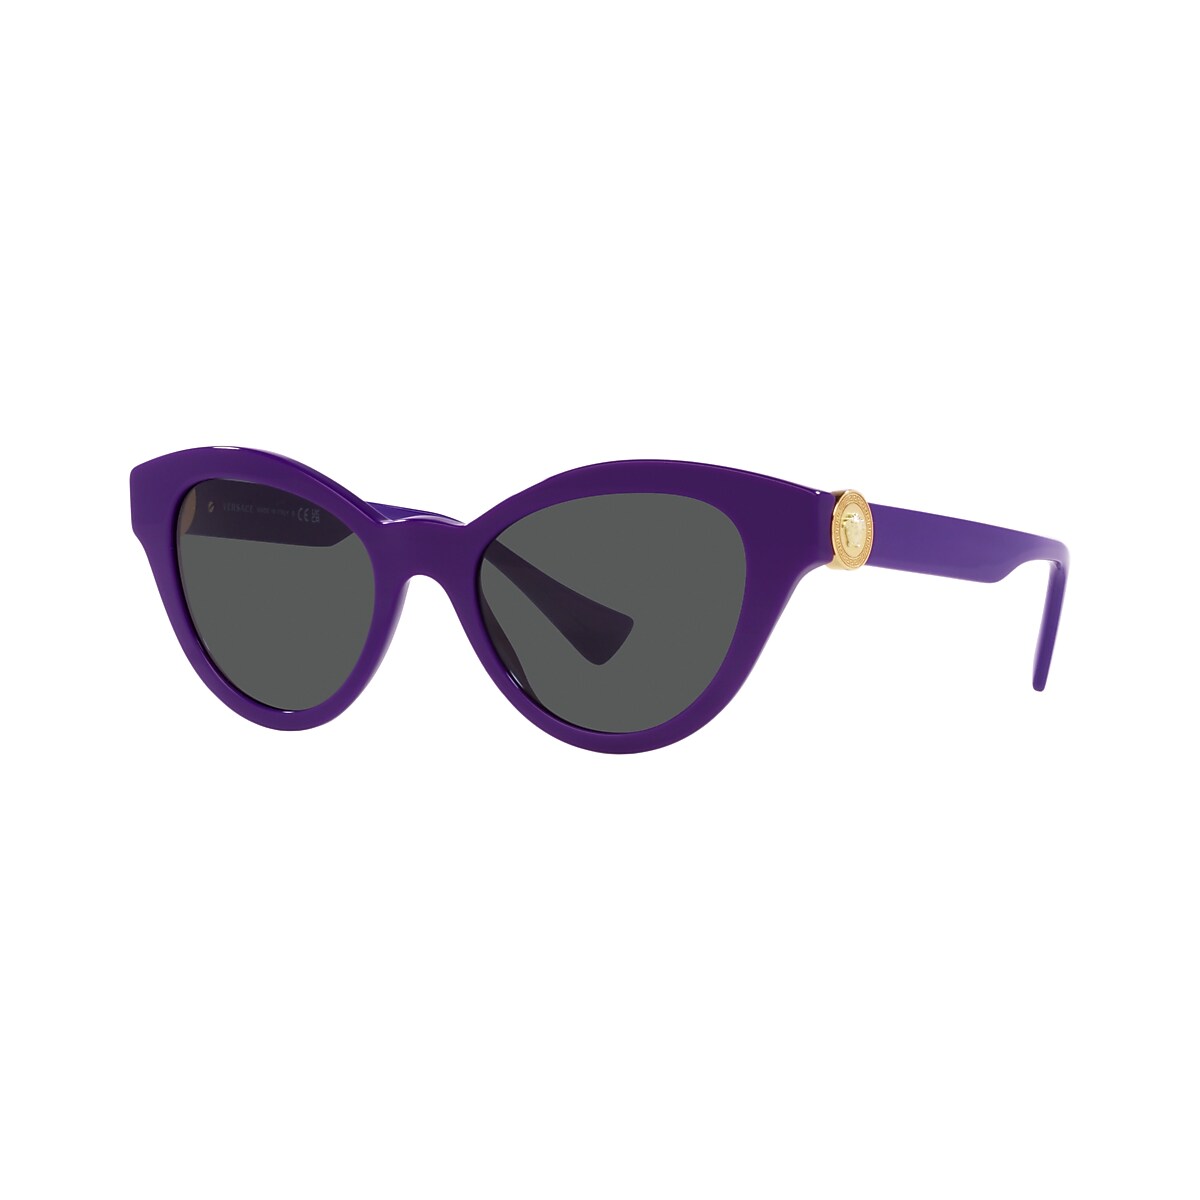 Stunning Ain't Easy Sunglasses - Purple